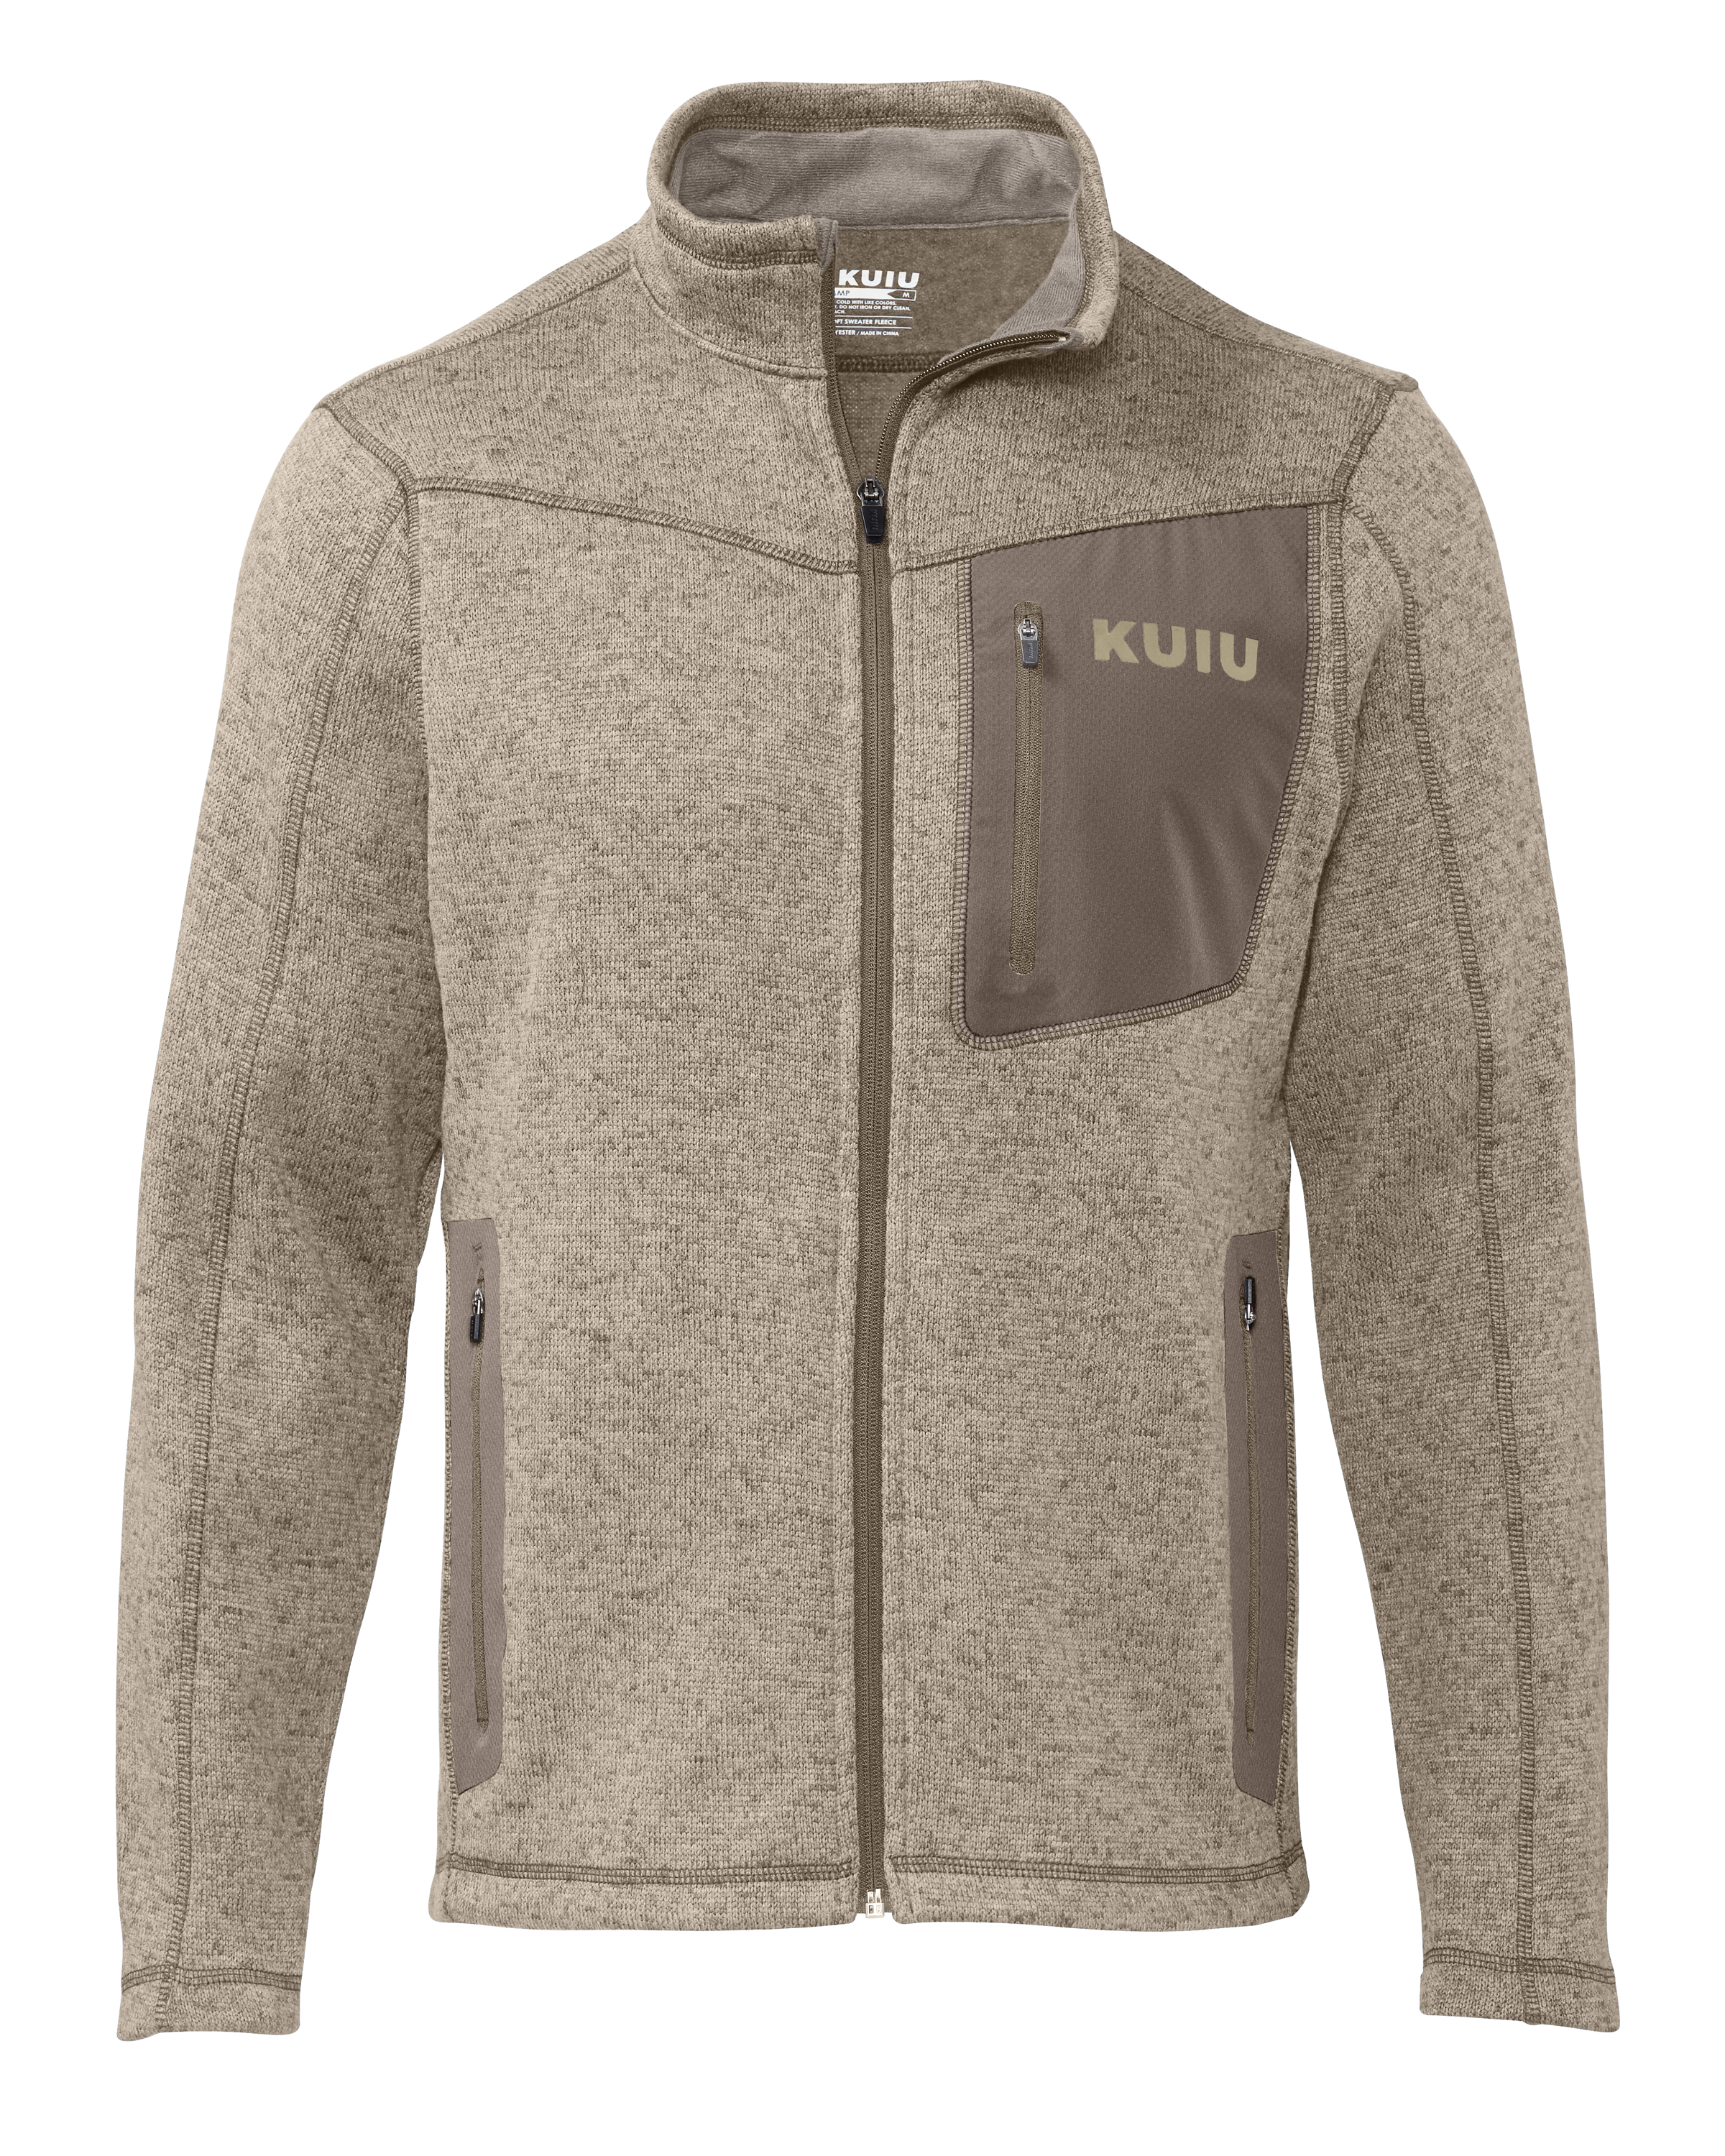 KUIU Base Camp Full Zip Sweater in Khaki | Medium